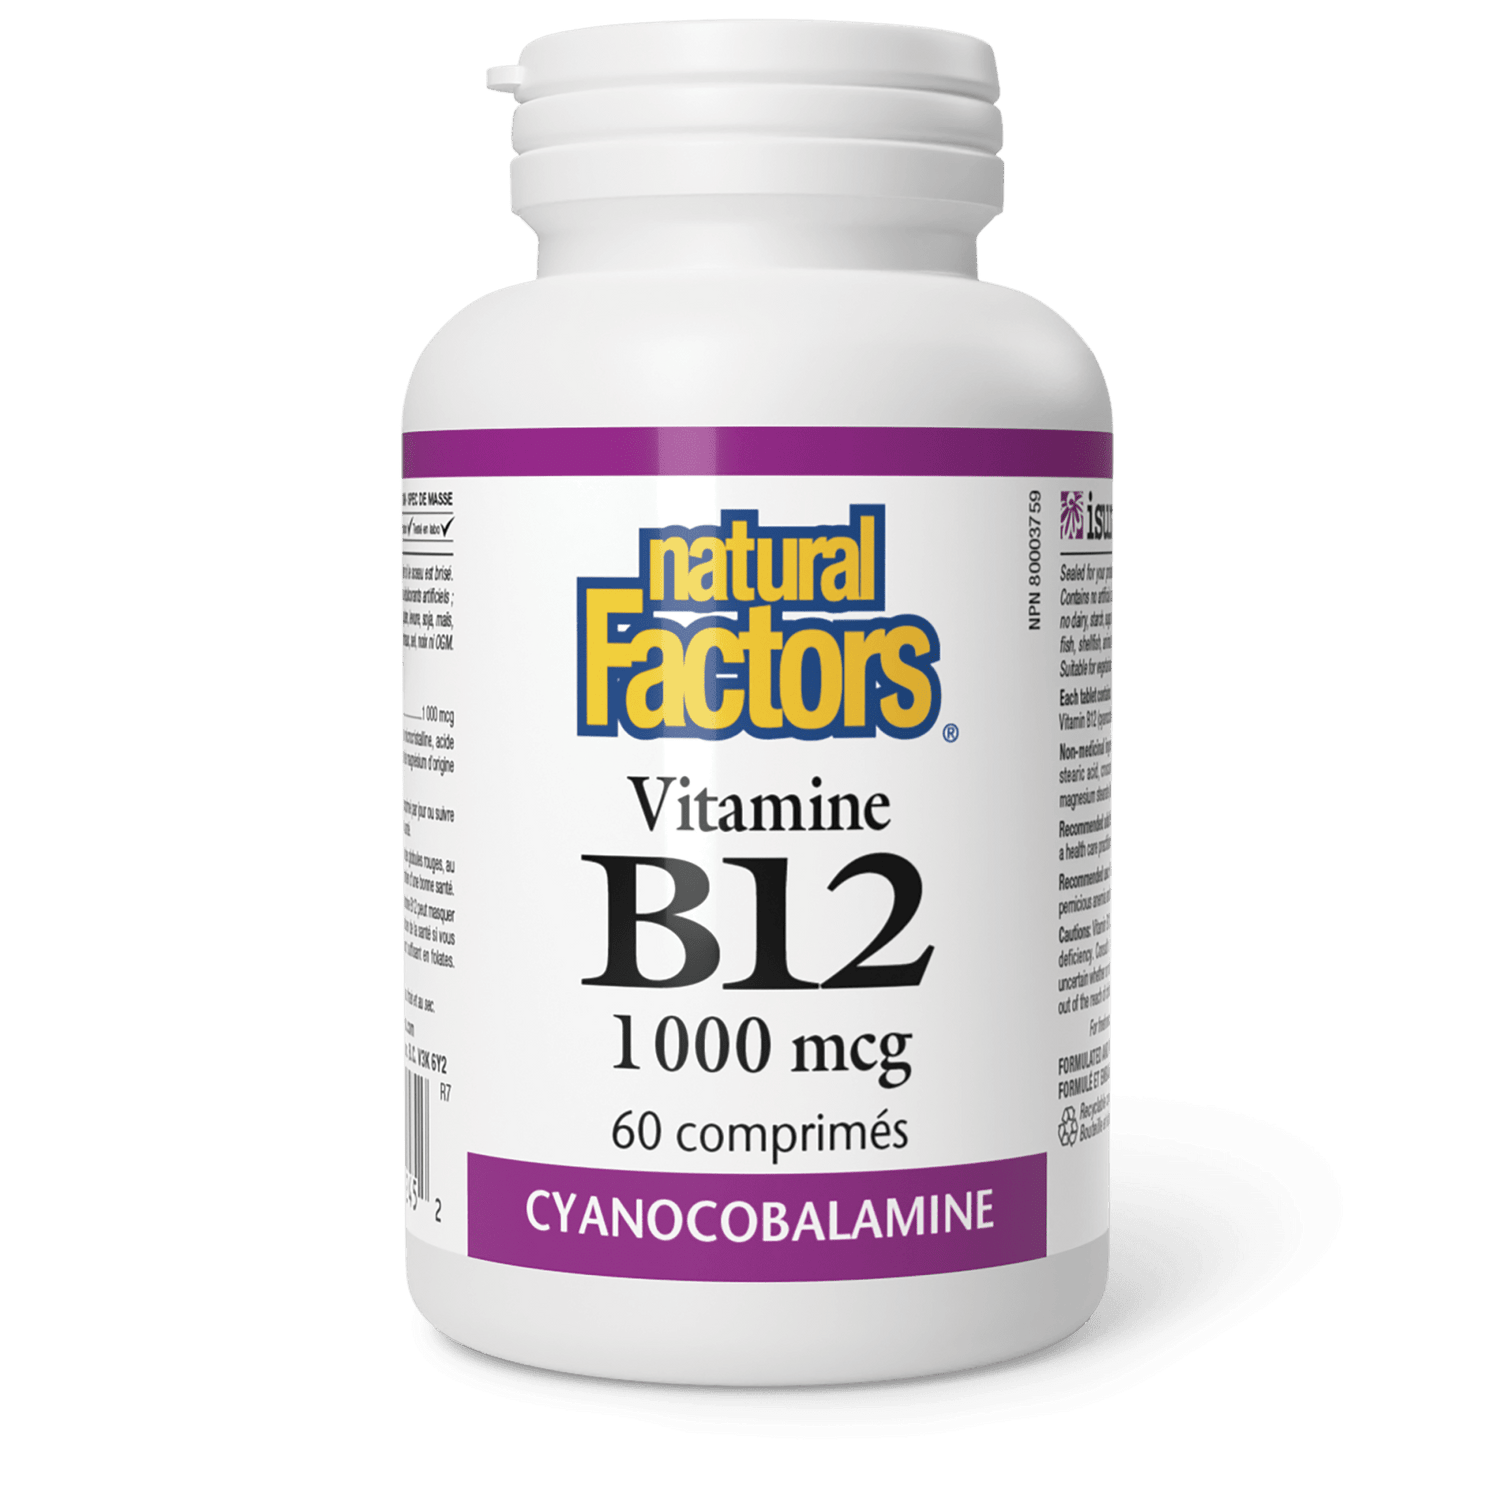 Vitamine B12 1 000 mcg, Natural Factors|v|image|1245